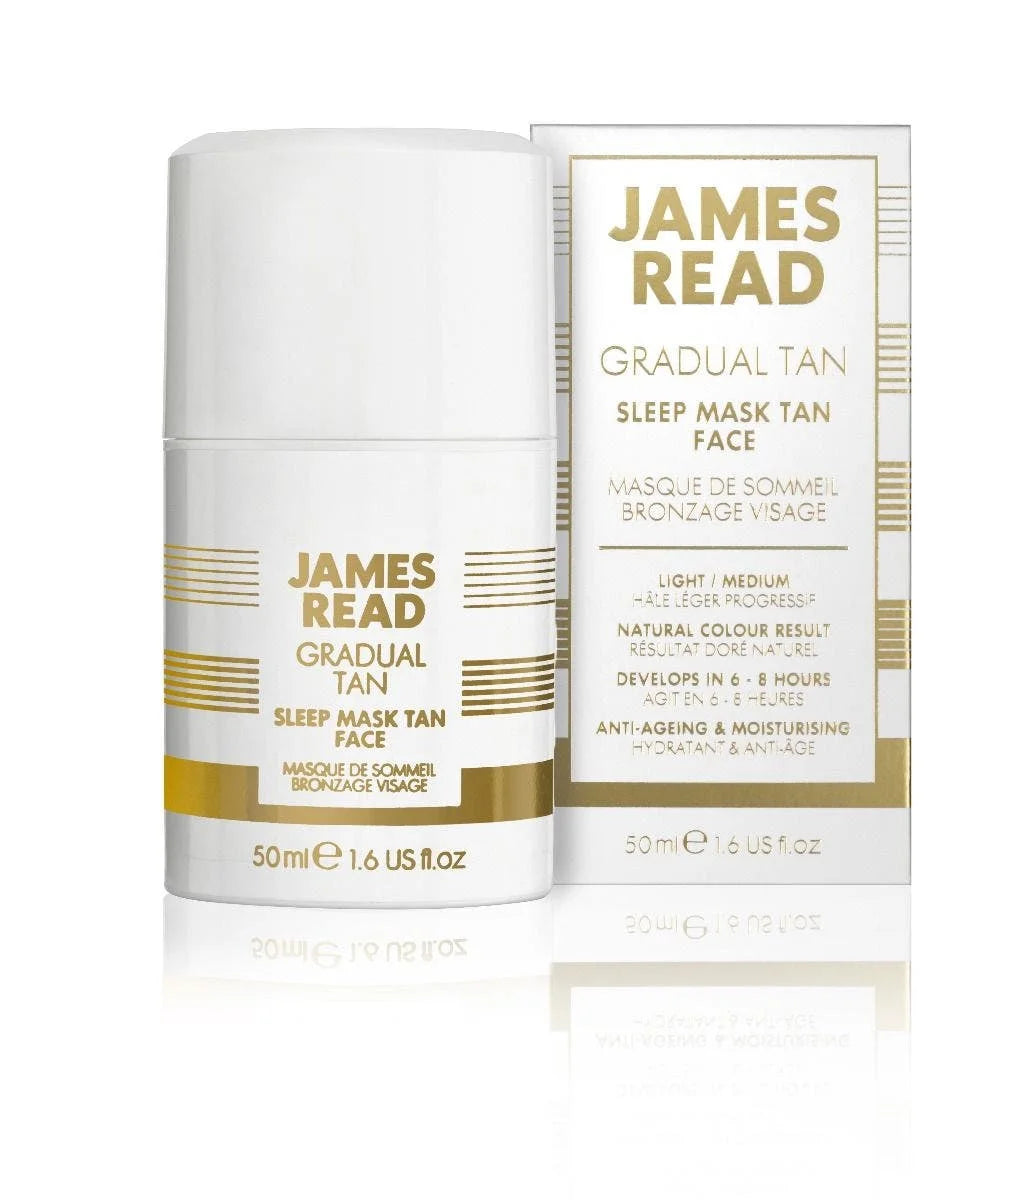 JAMES READ GRADUAL TAN SLEEP MASK FACE 50ml